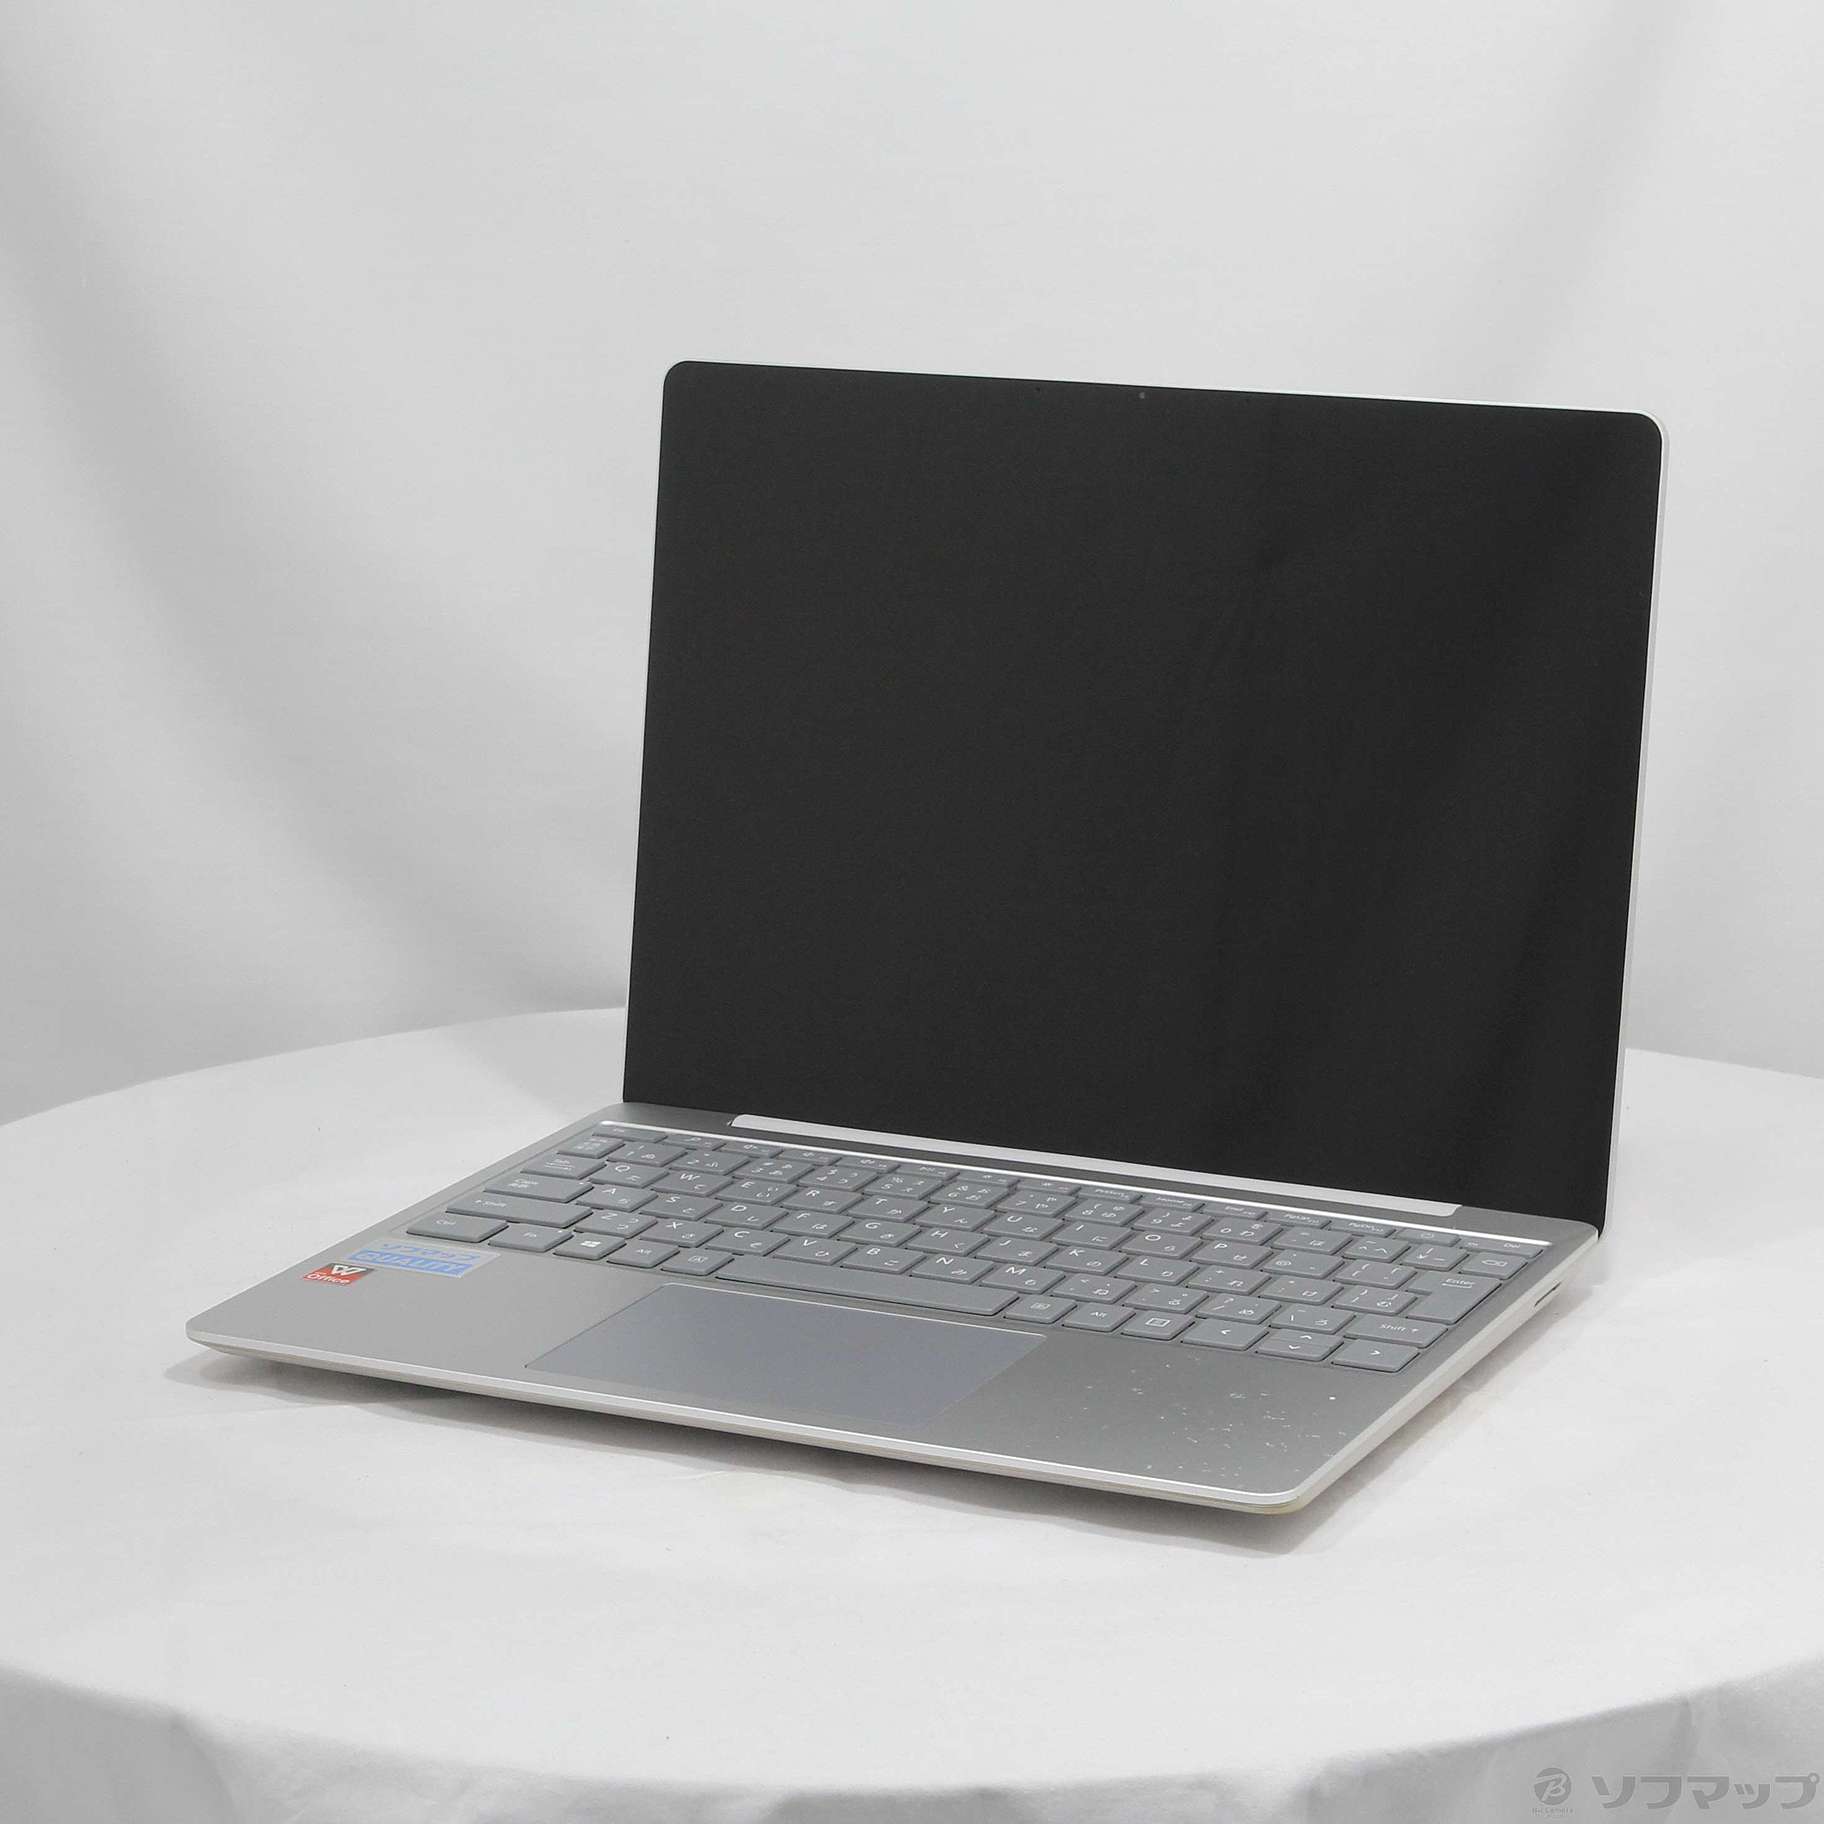 【新品未開封】Surface Laptop Go THH-00020